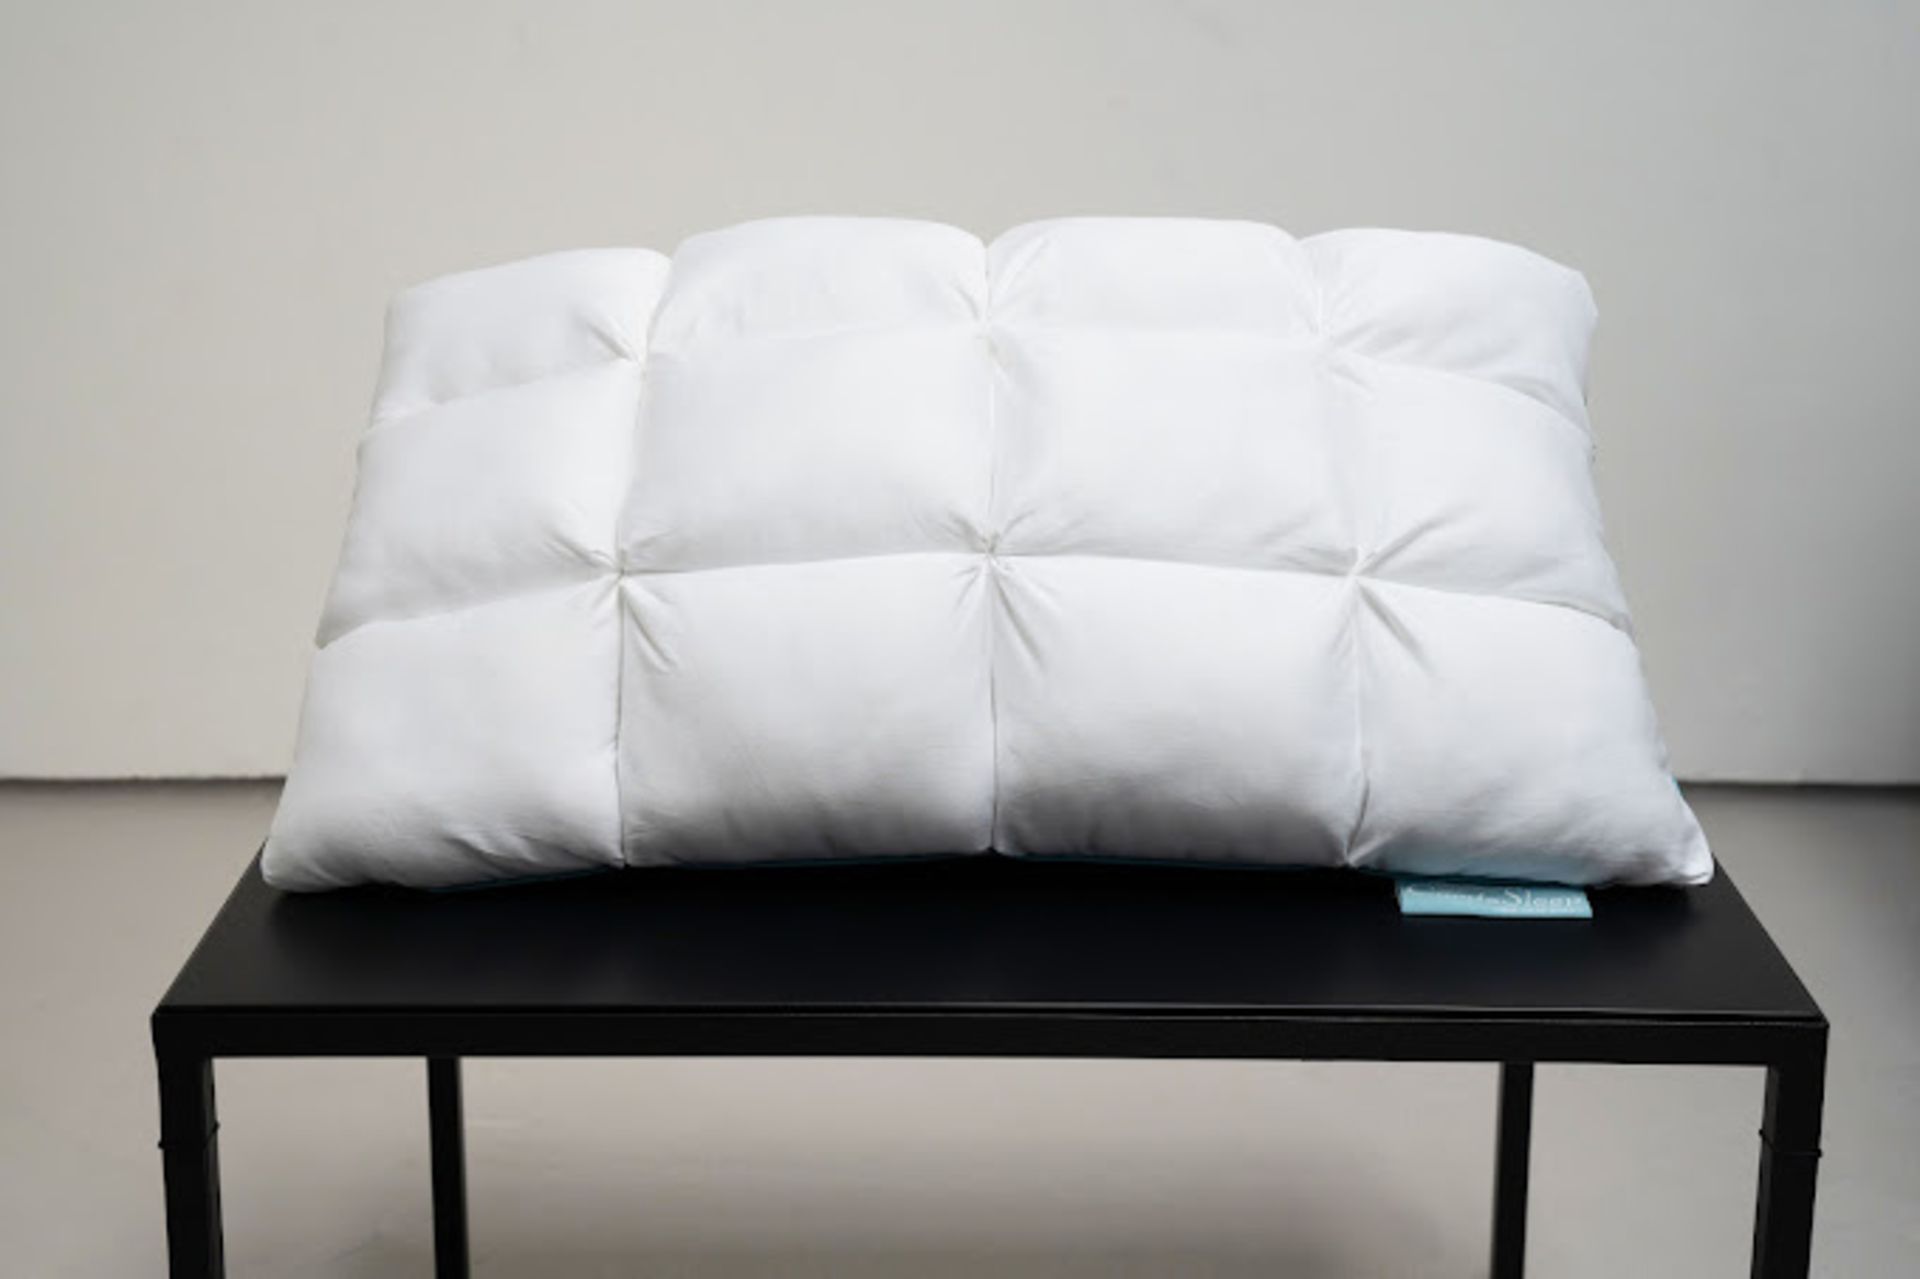 2 x ComfaSleep PL0001 Pillows - Image 4 of 20